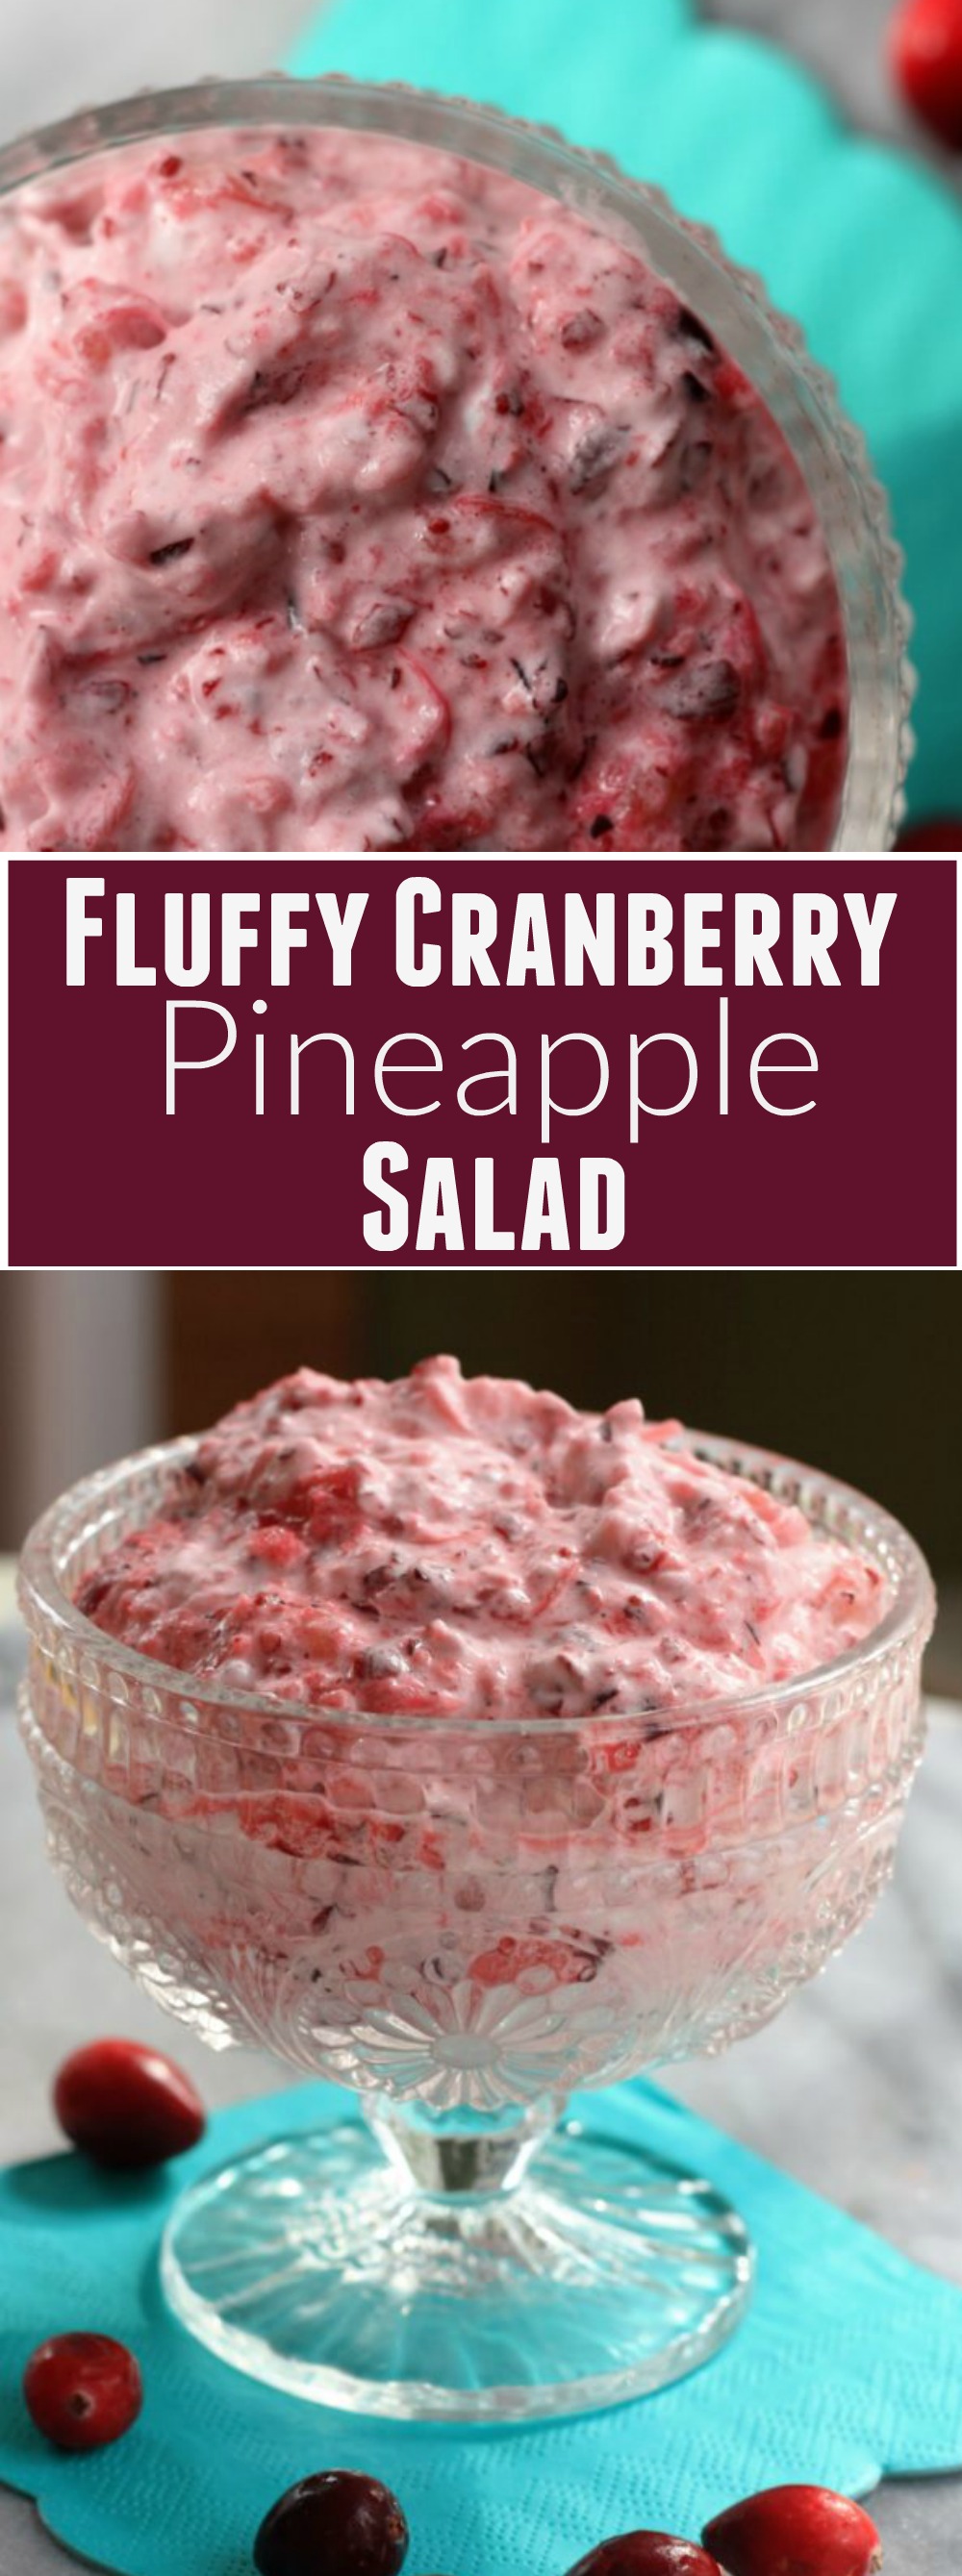 Fluffy Cranberry Pineapple Salad